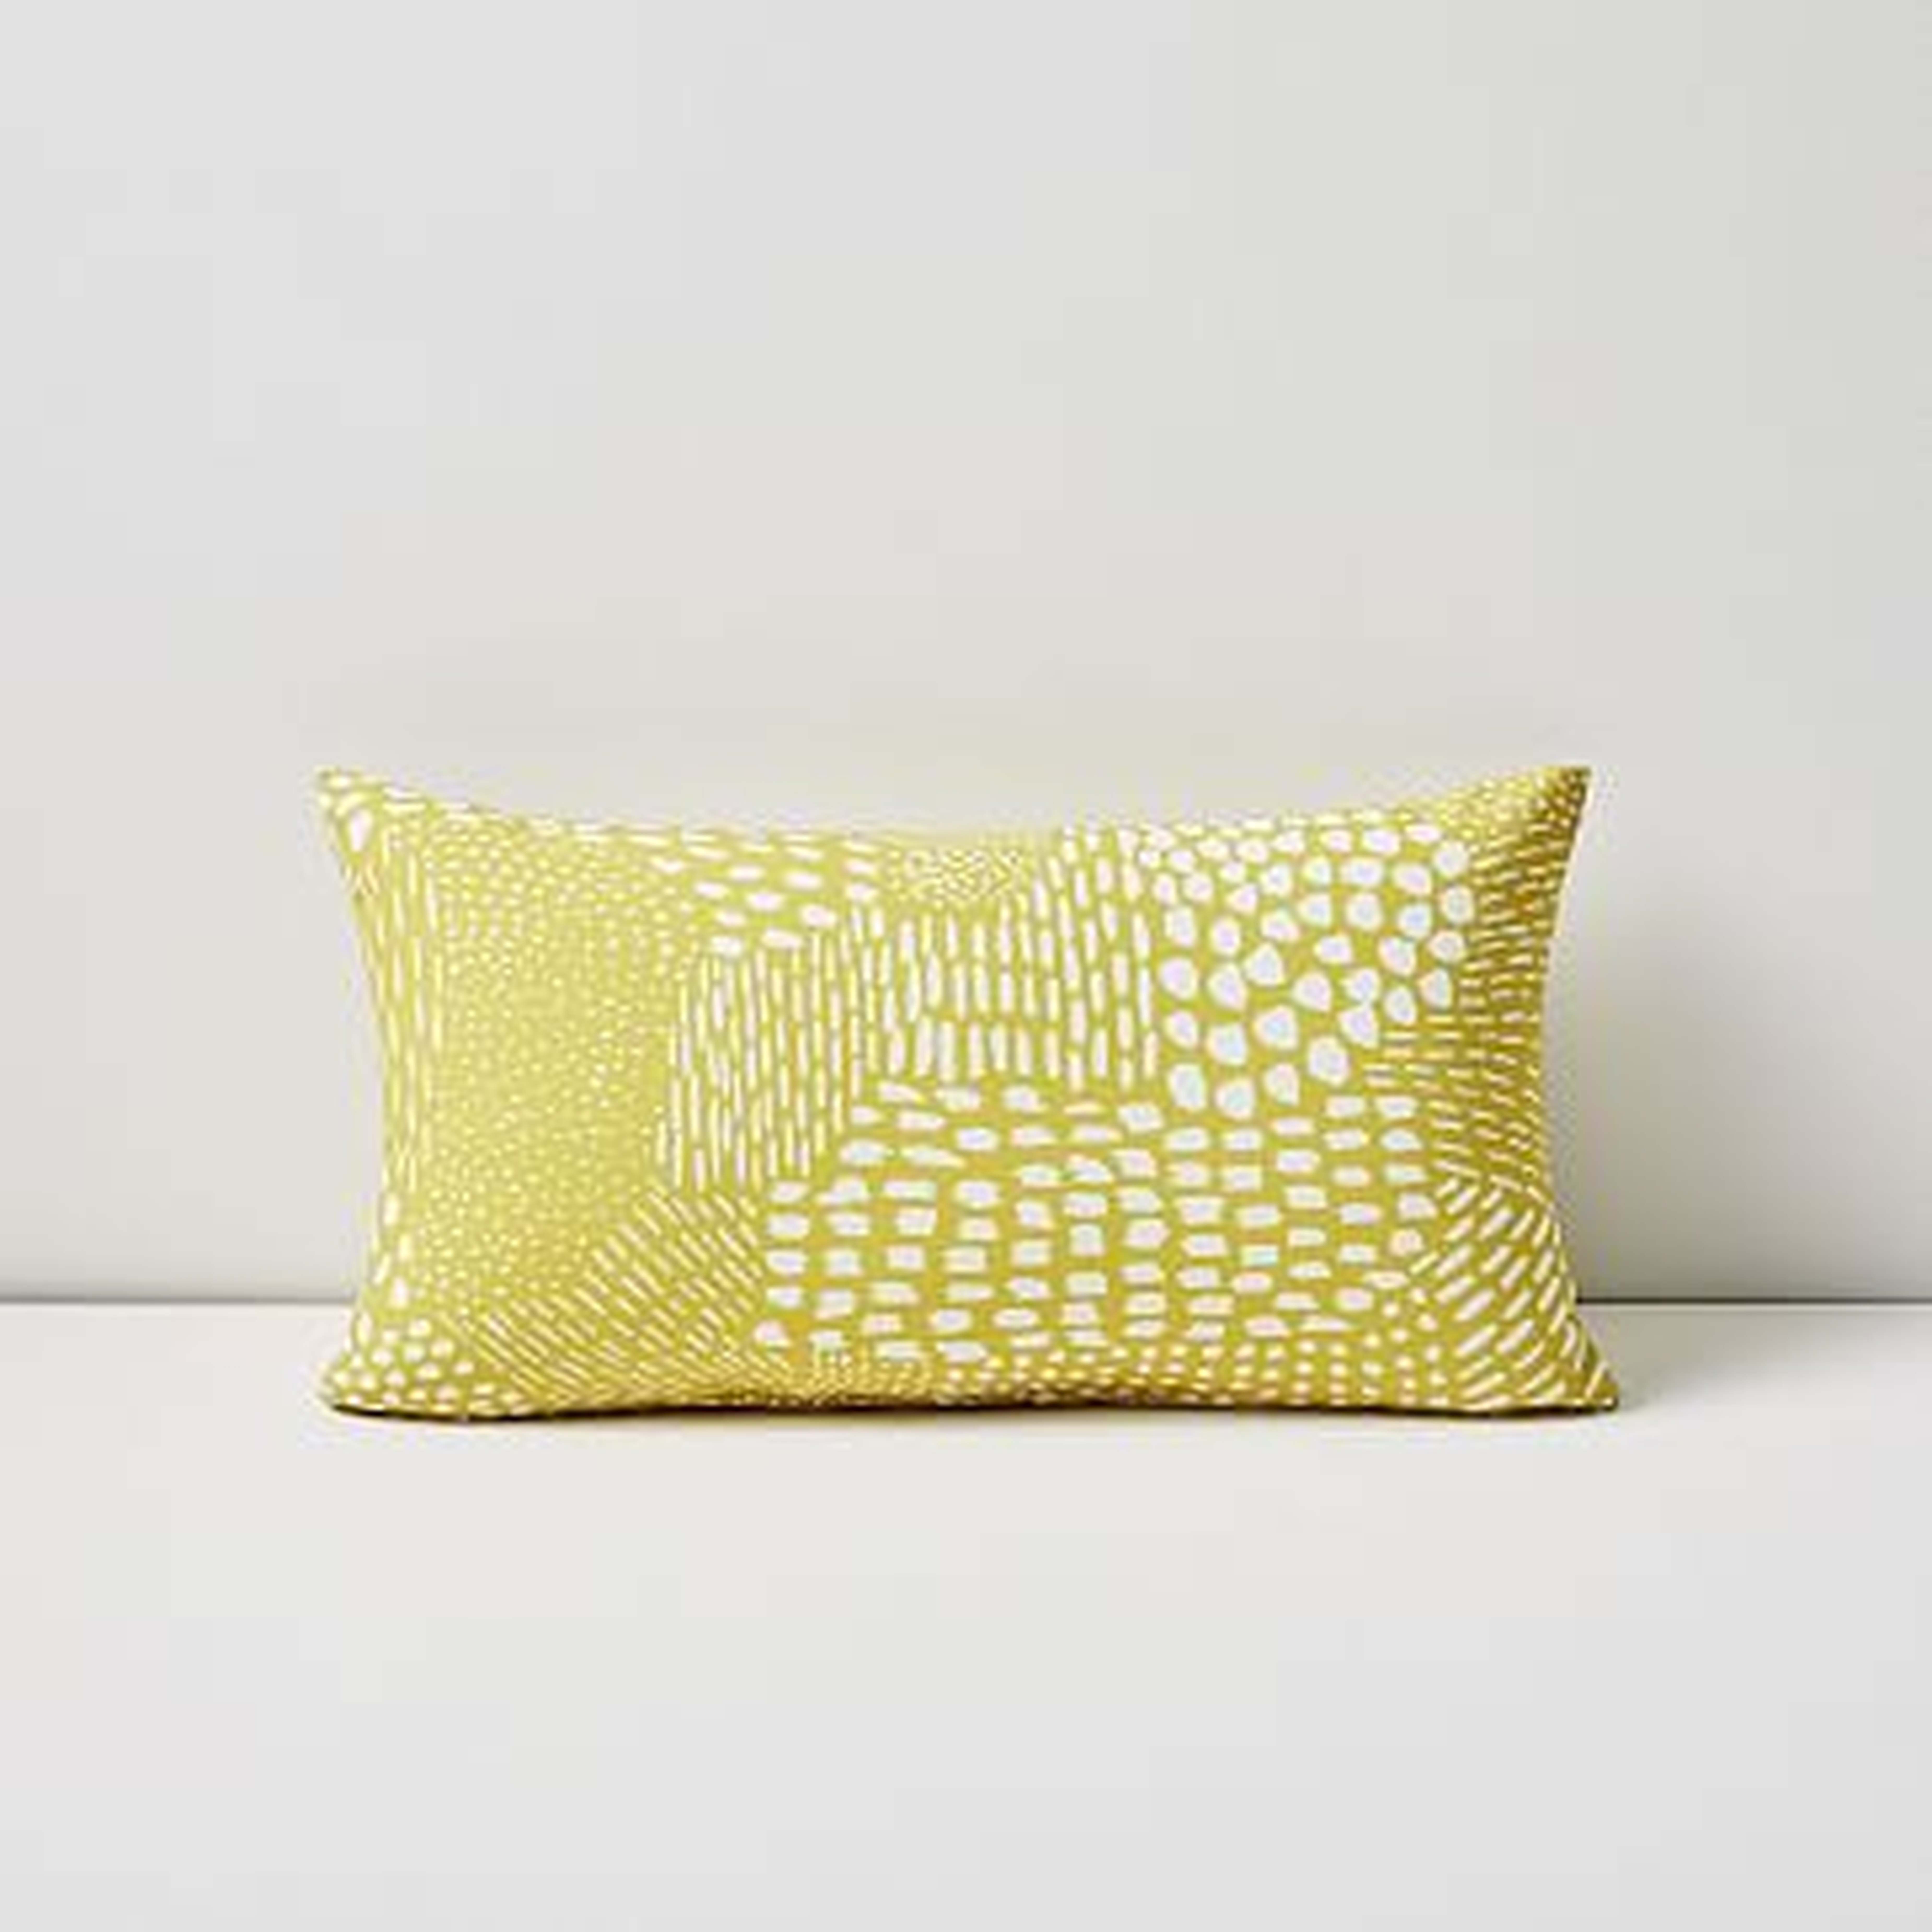 Outdoor Dot Dashes Pillow, 12"x21", Citrus Yellow - West Elm